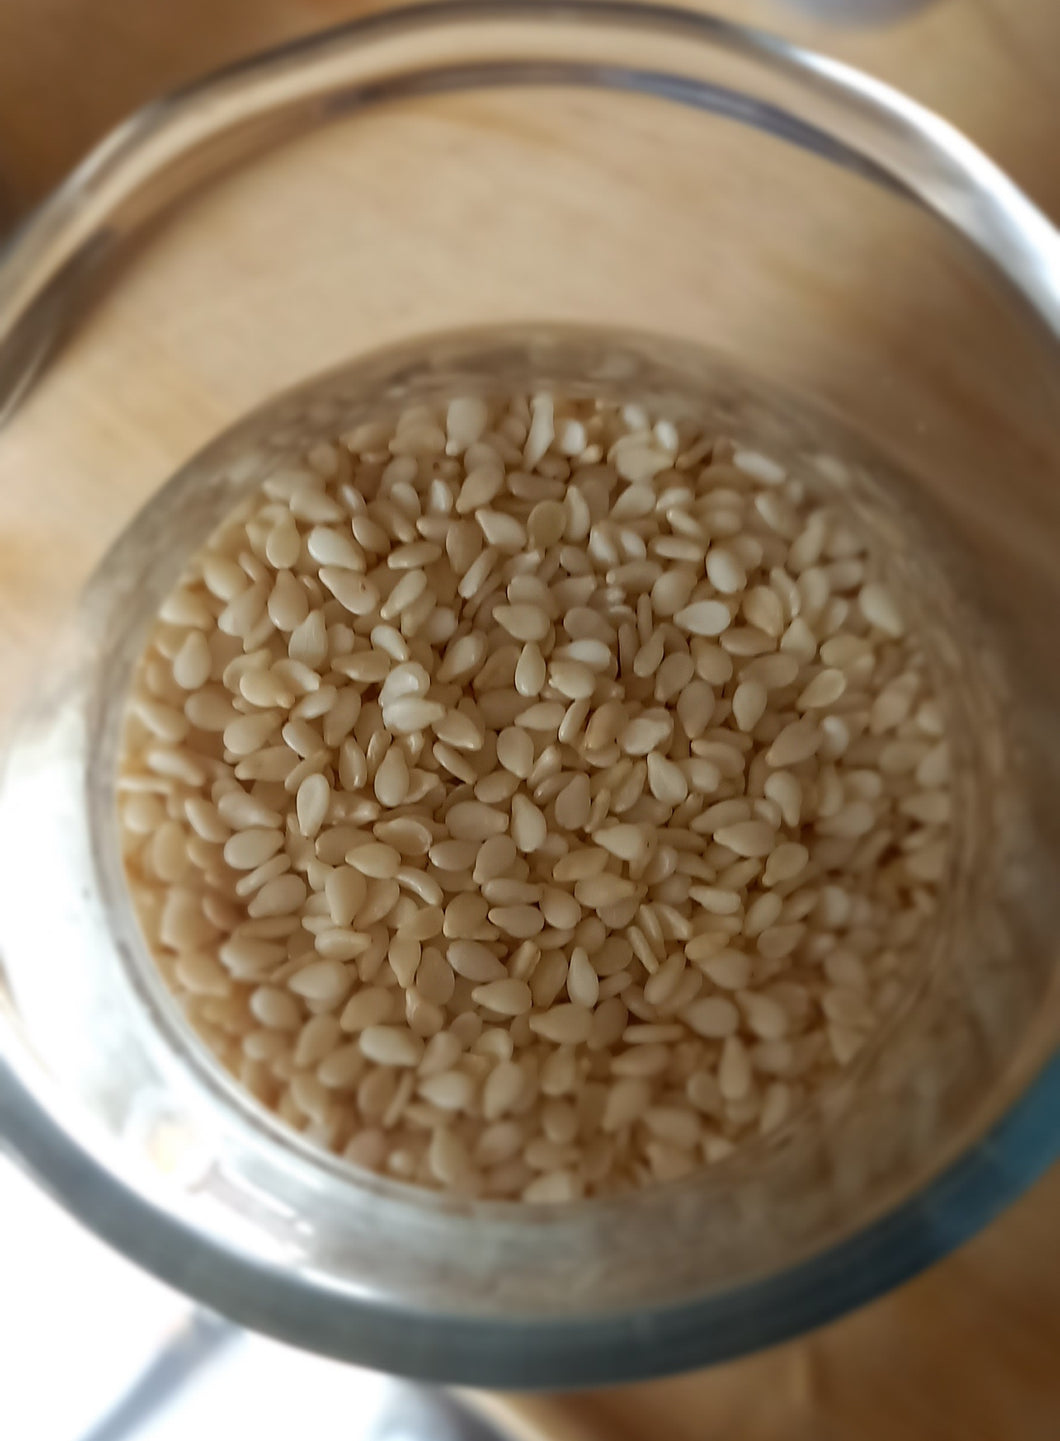 Sesame seeds